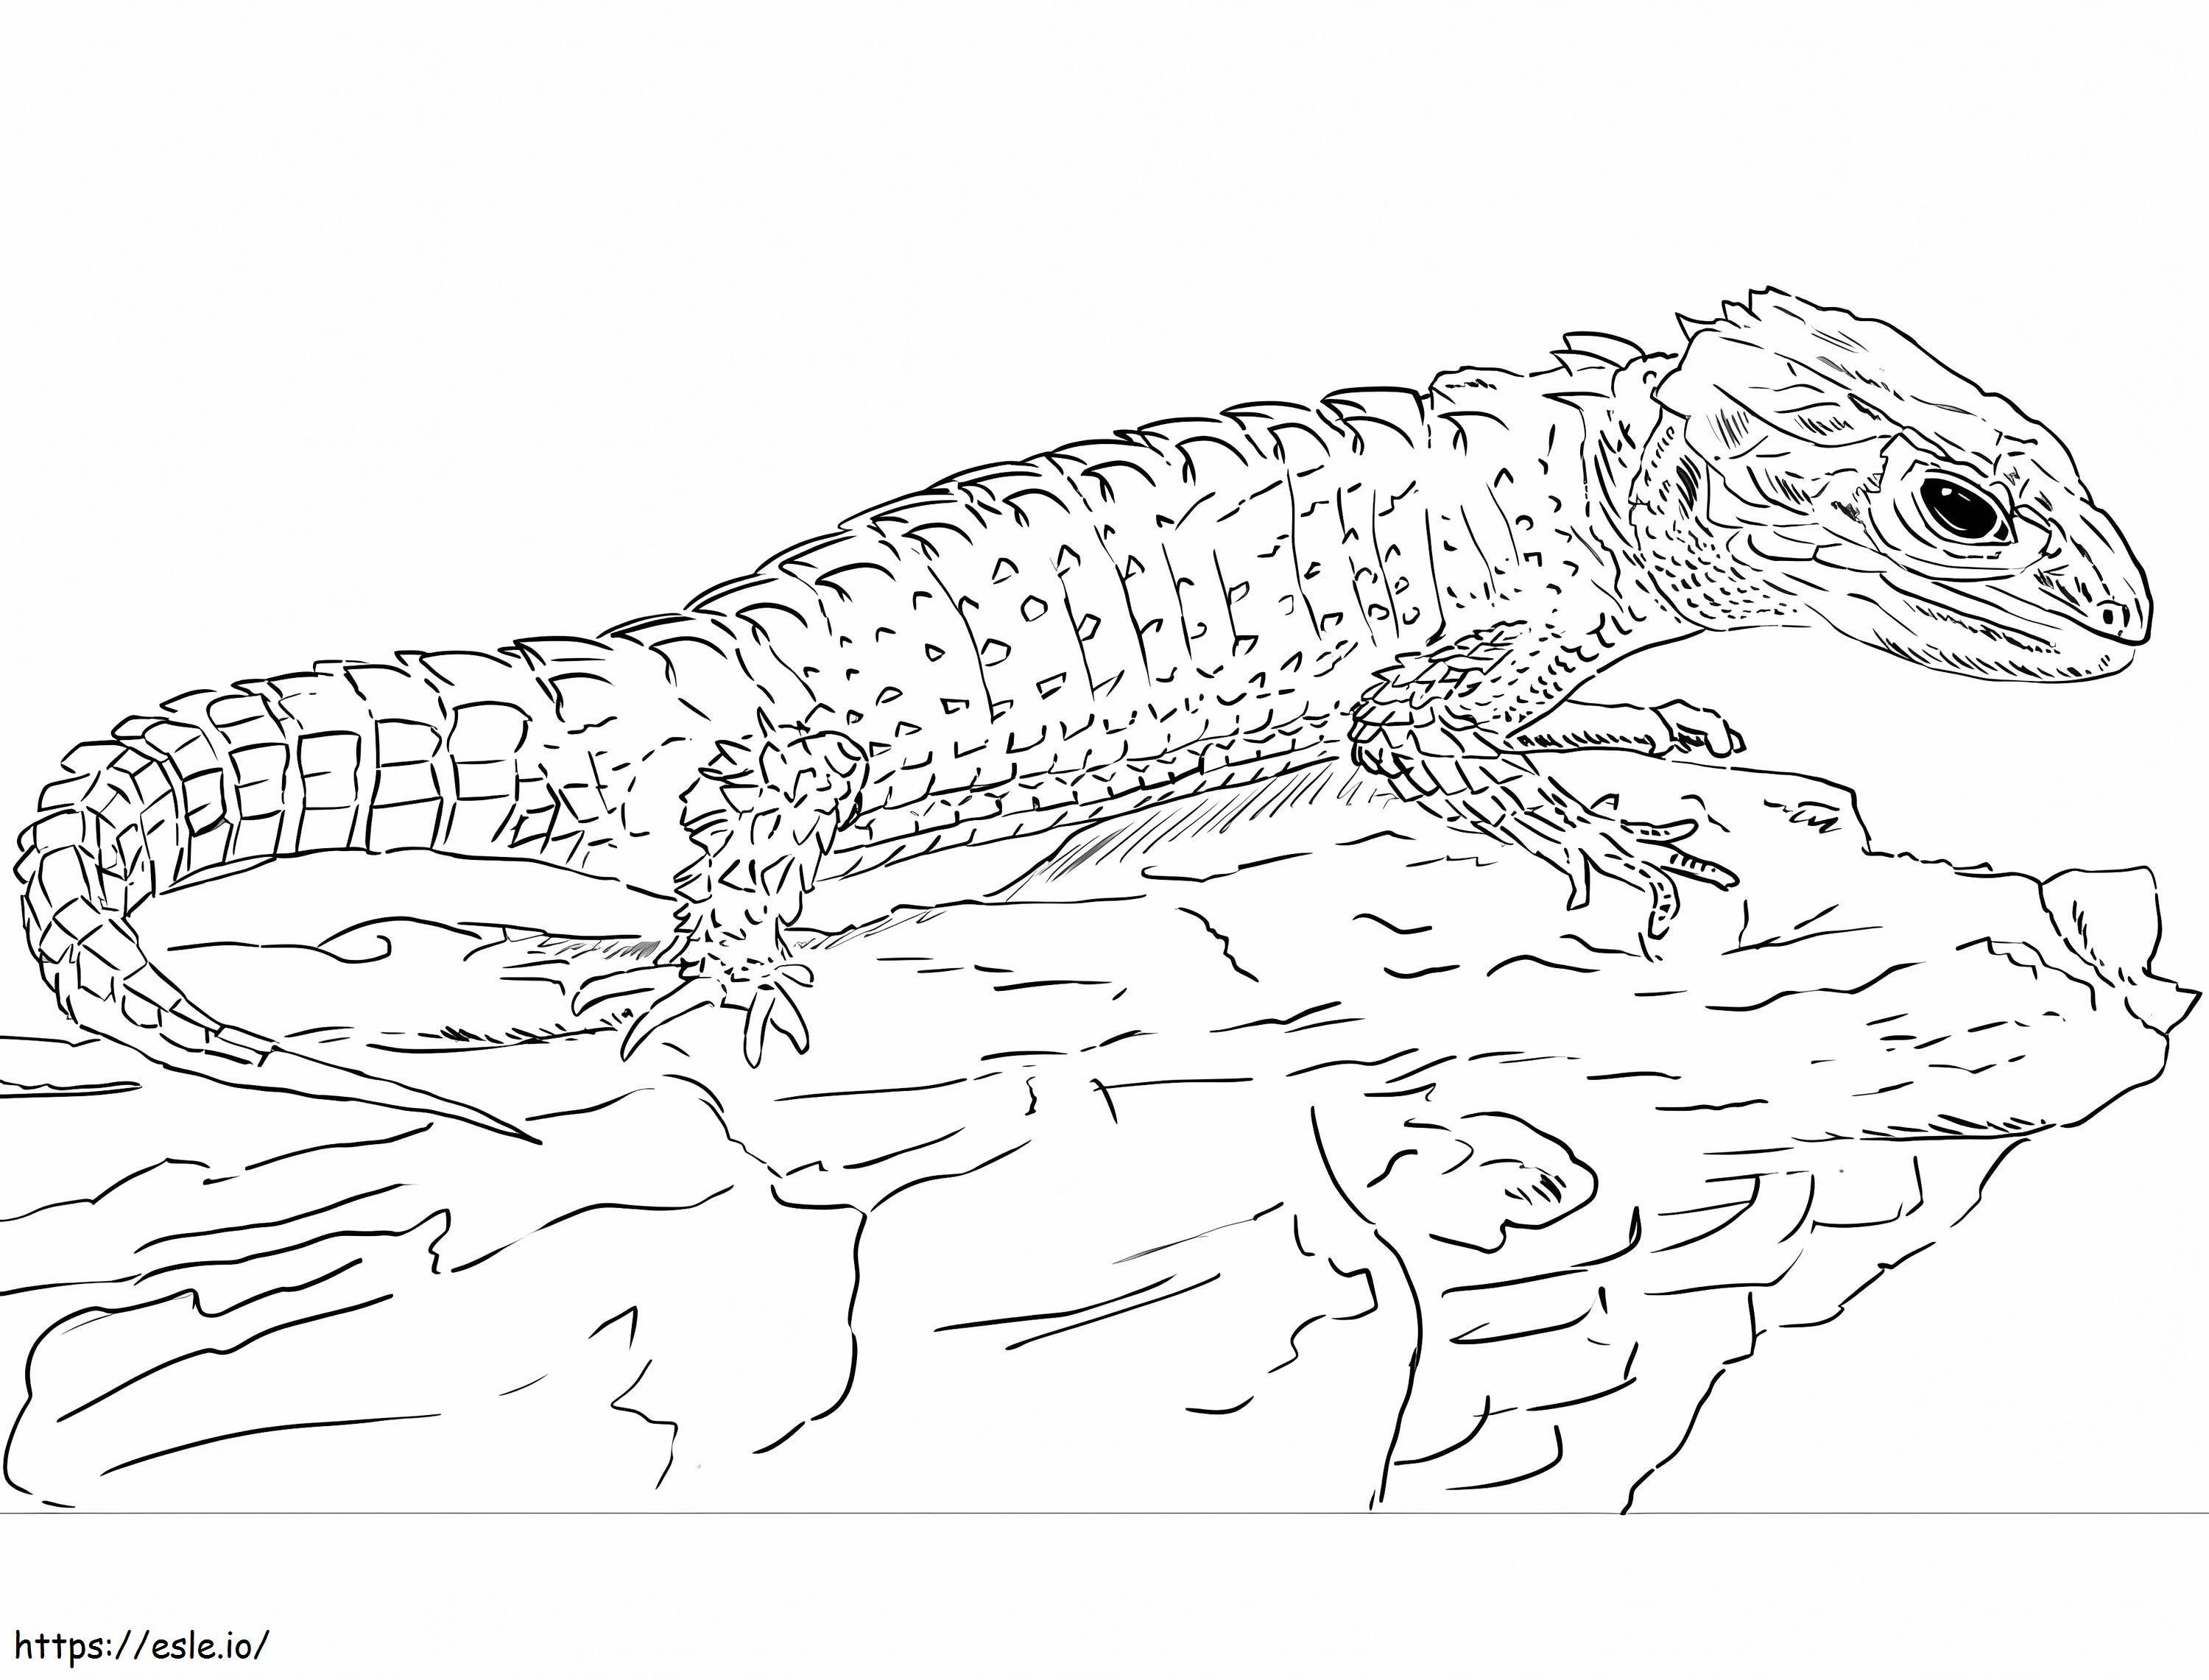 Krokodilskink ausmalbilder